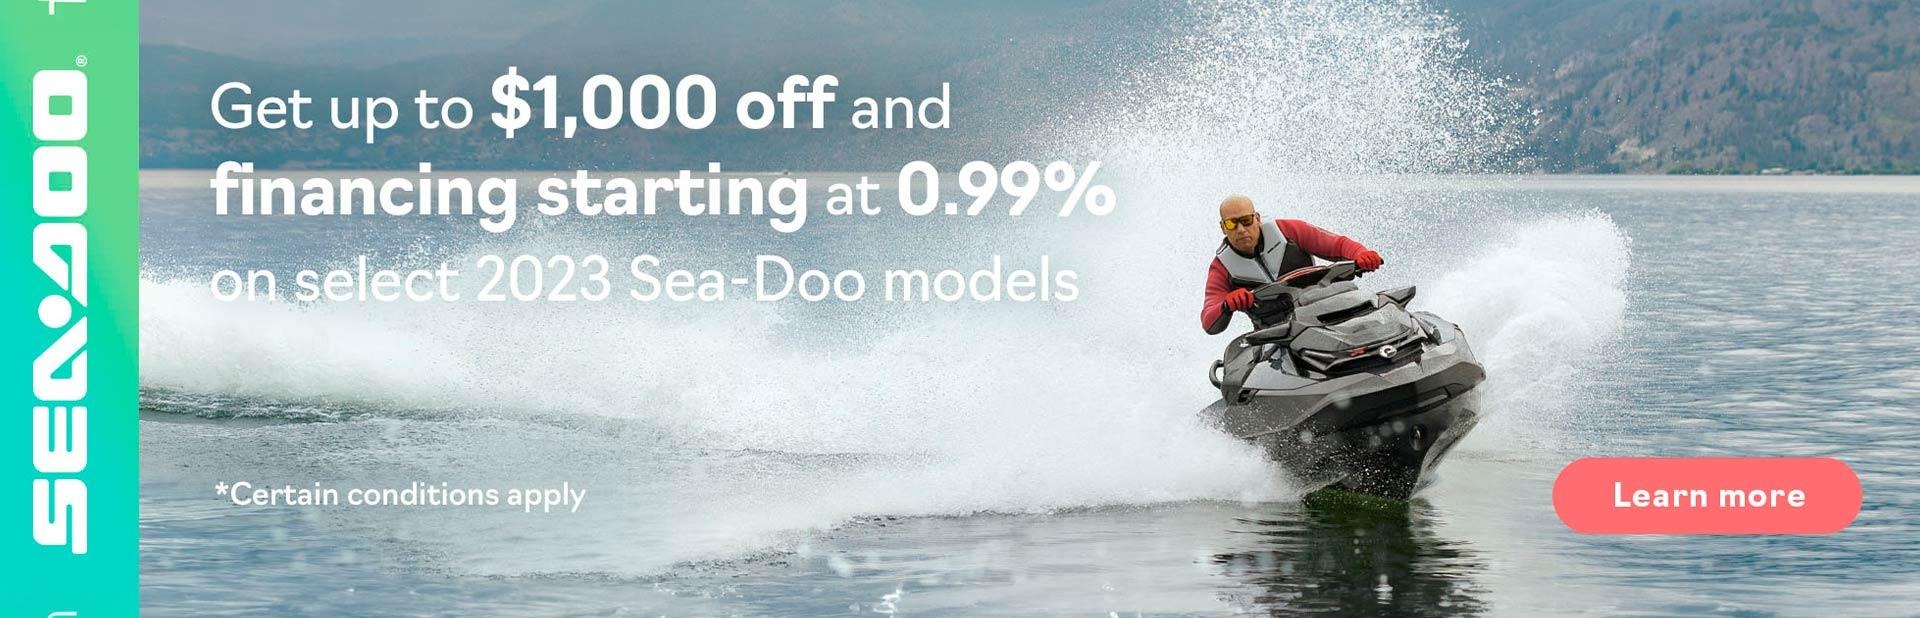 Sea-Doo Promotion Tequesta Yamaha Waverunner Jet Ski Deal